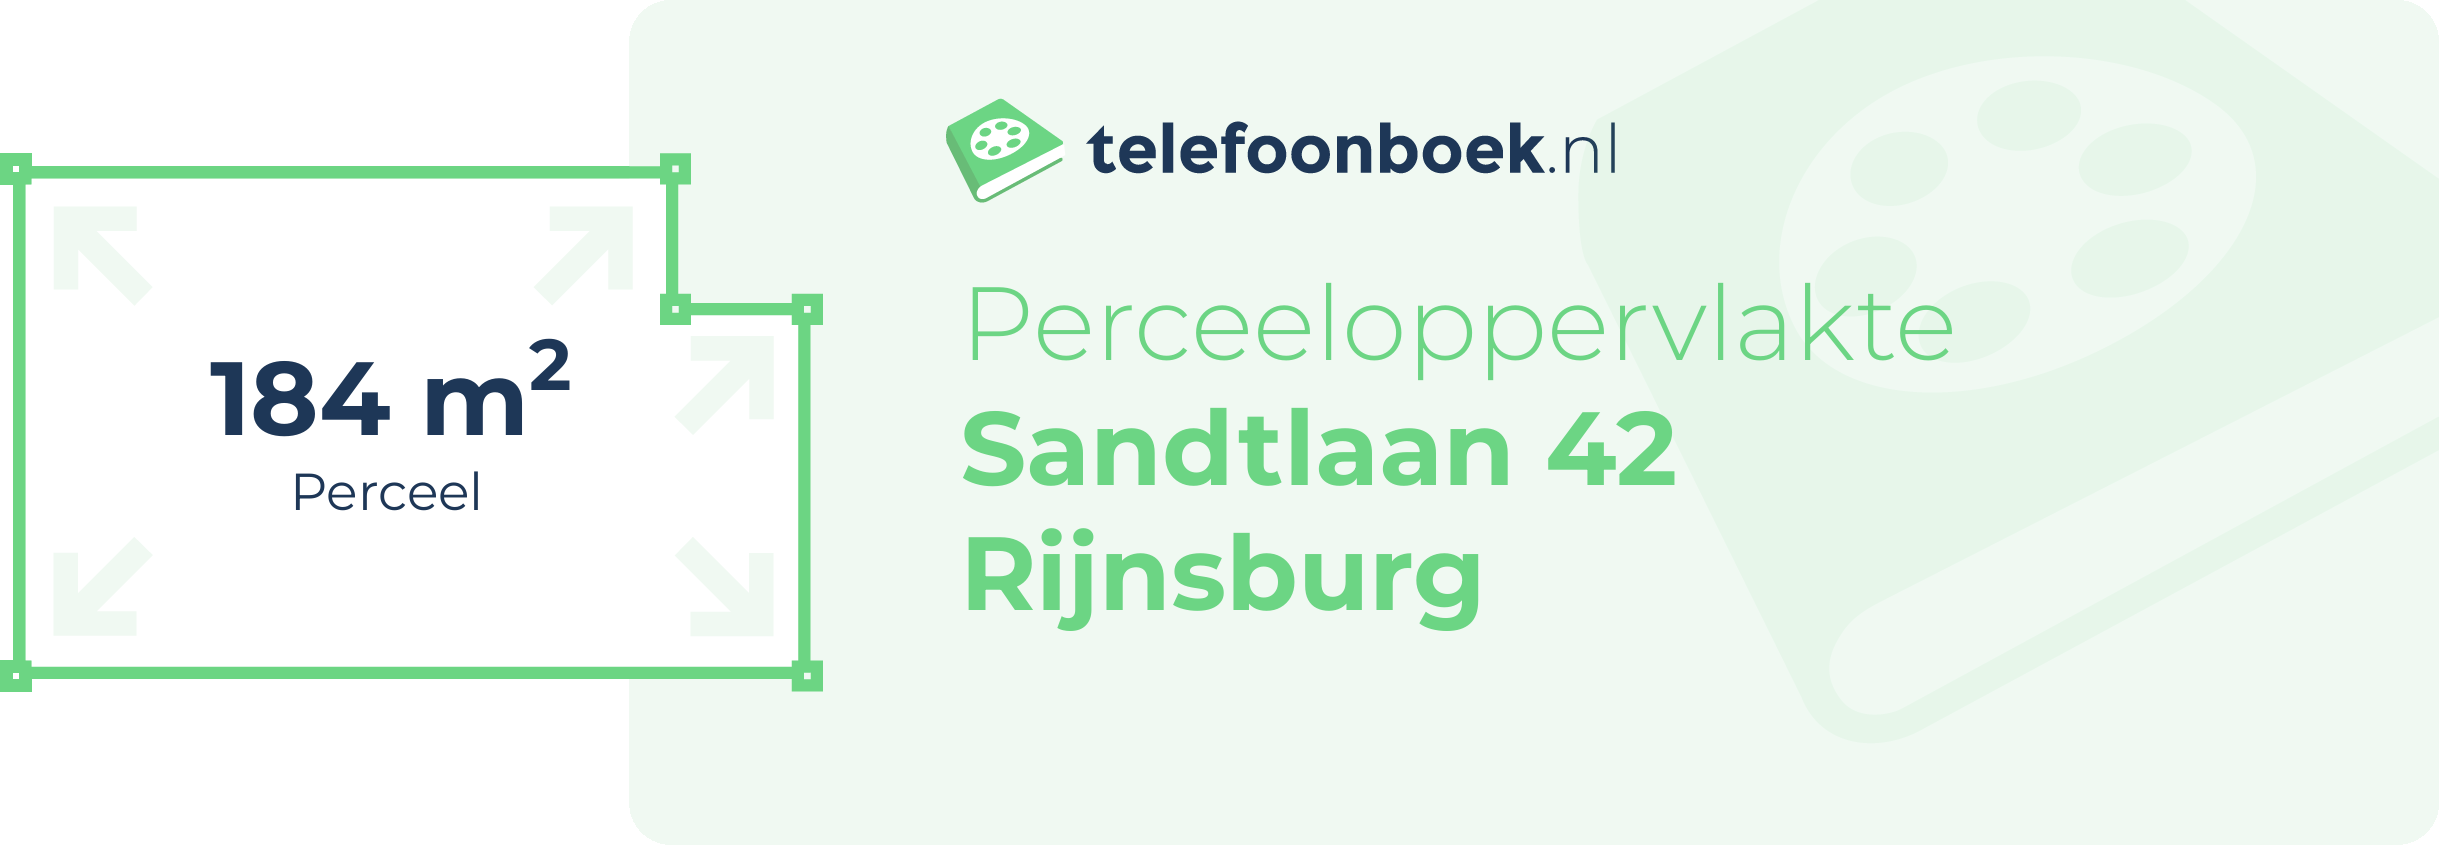 Perceeloppervlakte Sandtlaan 42 Rijnsburg